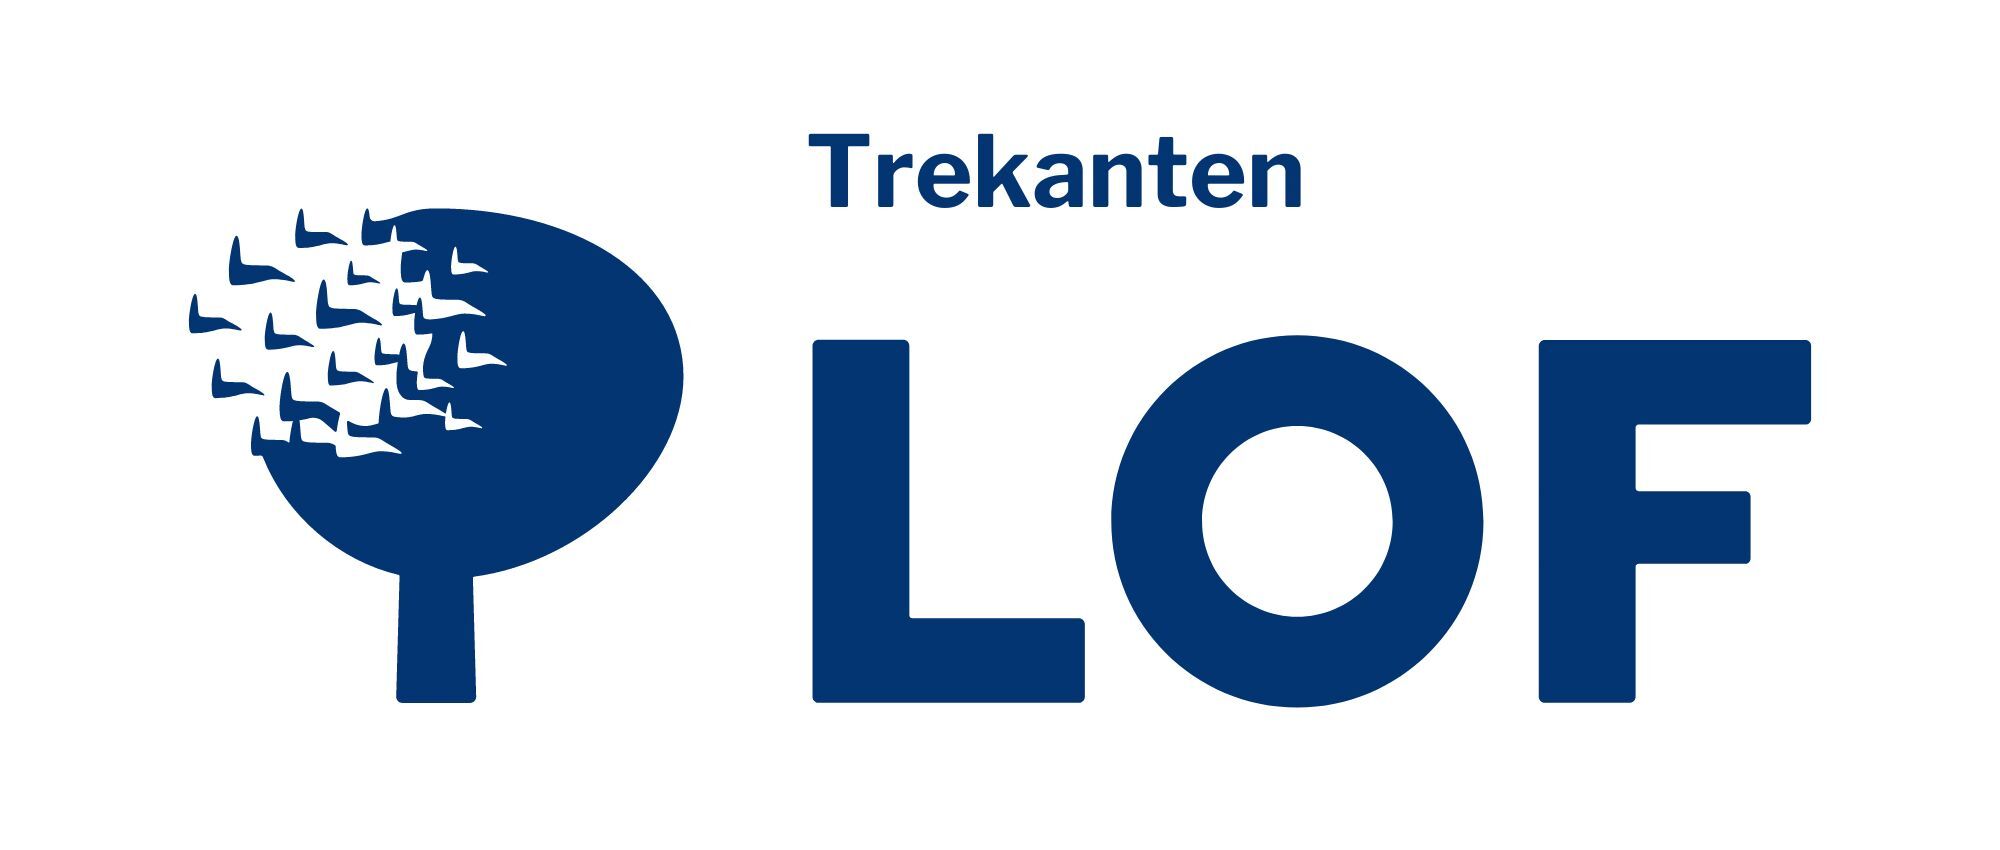 Logo for LOF Trekanten